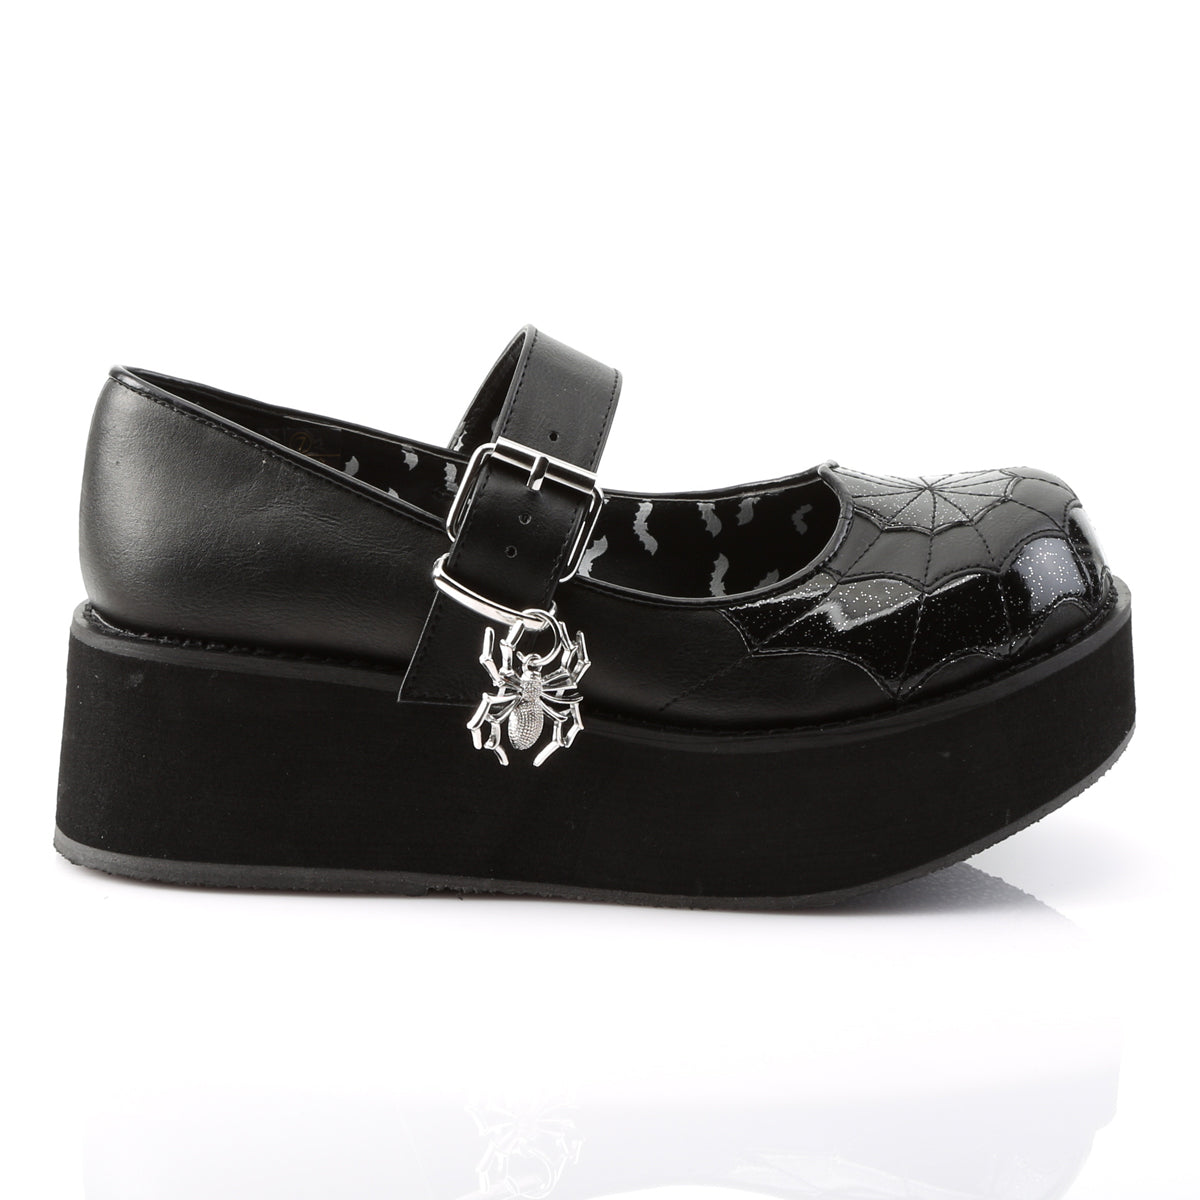 SPRITE-05 Demonia Black Vegan Leather-Black Patent Women's Heels & Platform Shoes [Demonia Cult Alternative Footwear]